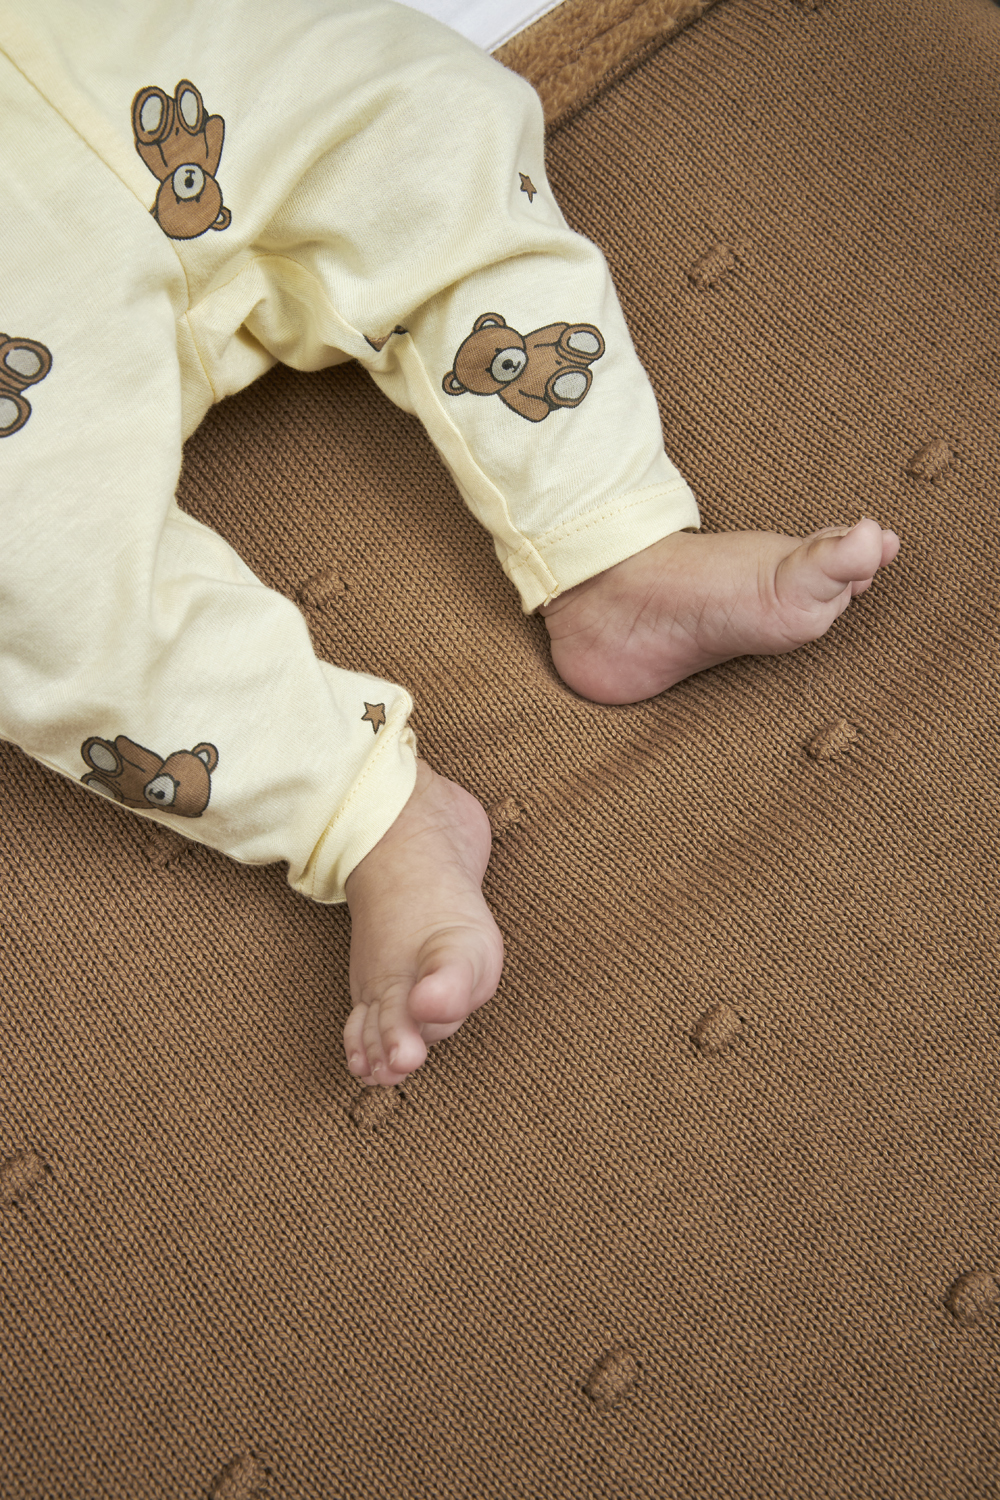 Baby Pyjama 2er pack Teddy Bear - soft yellow - 74/80